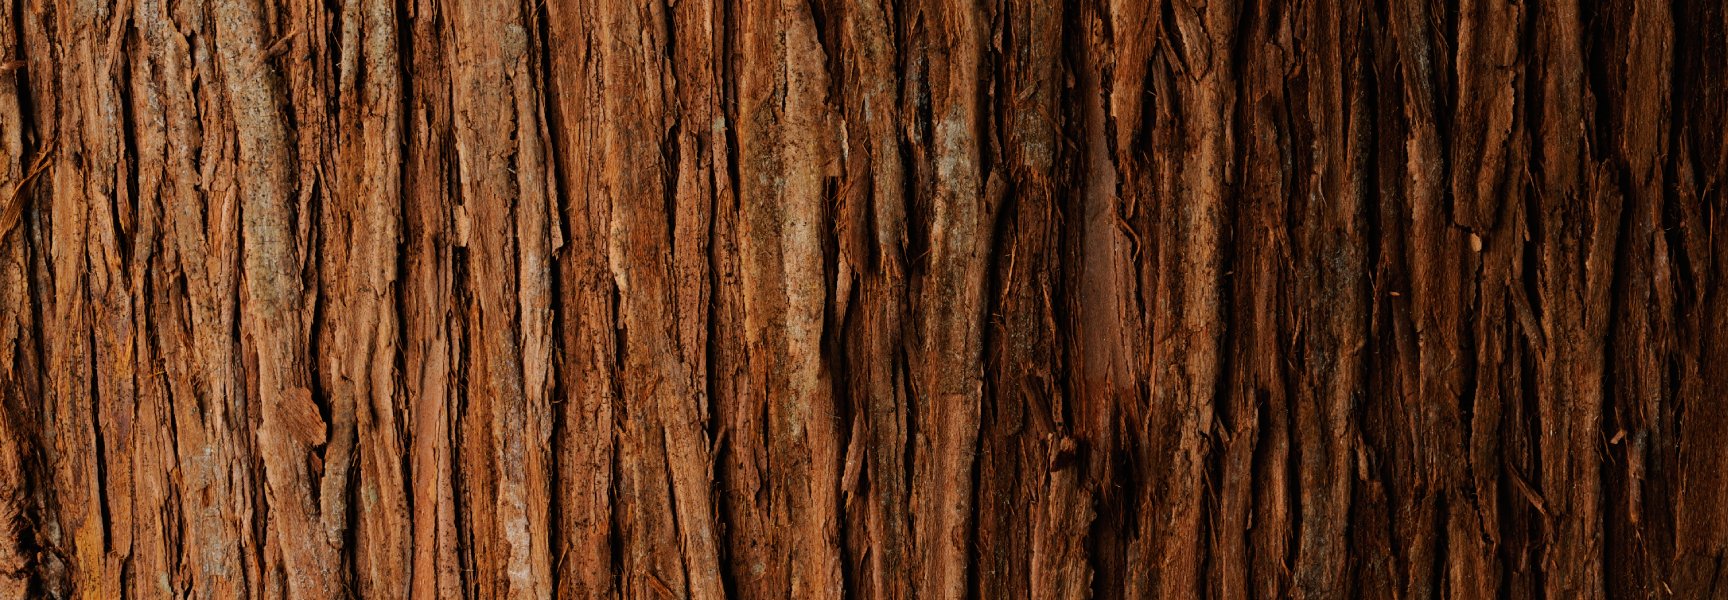 macro image of tree bark